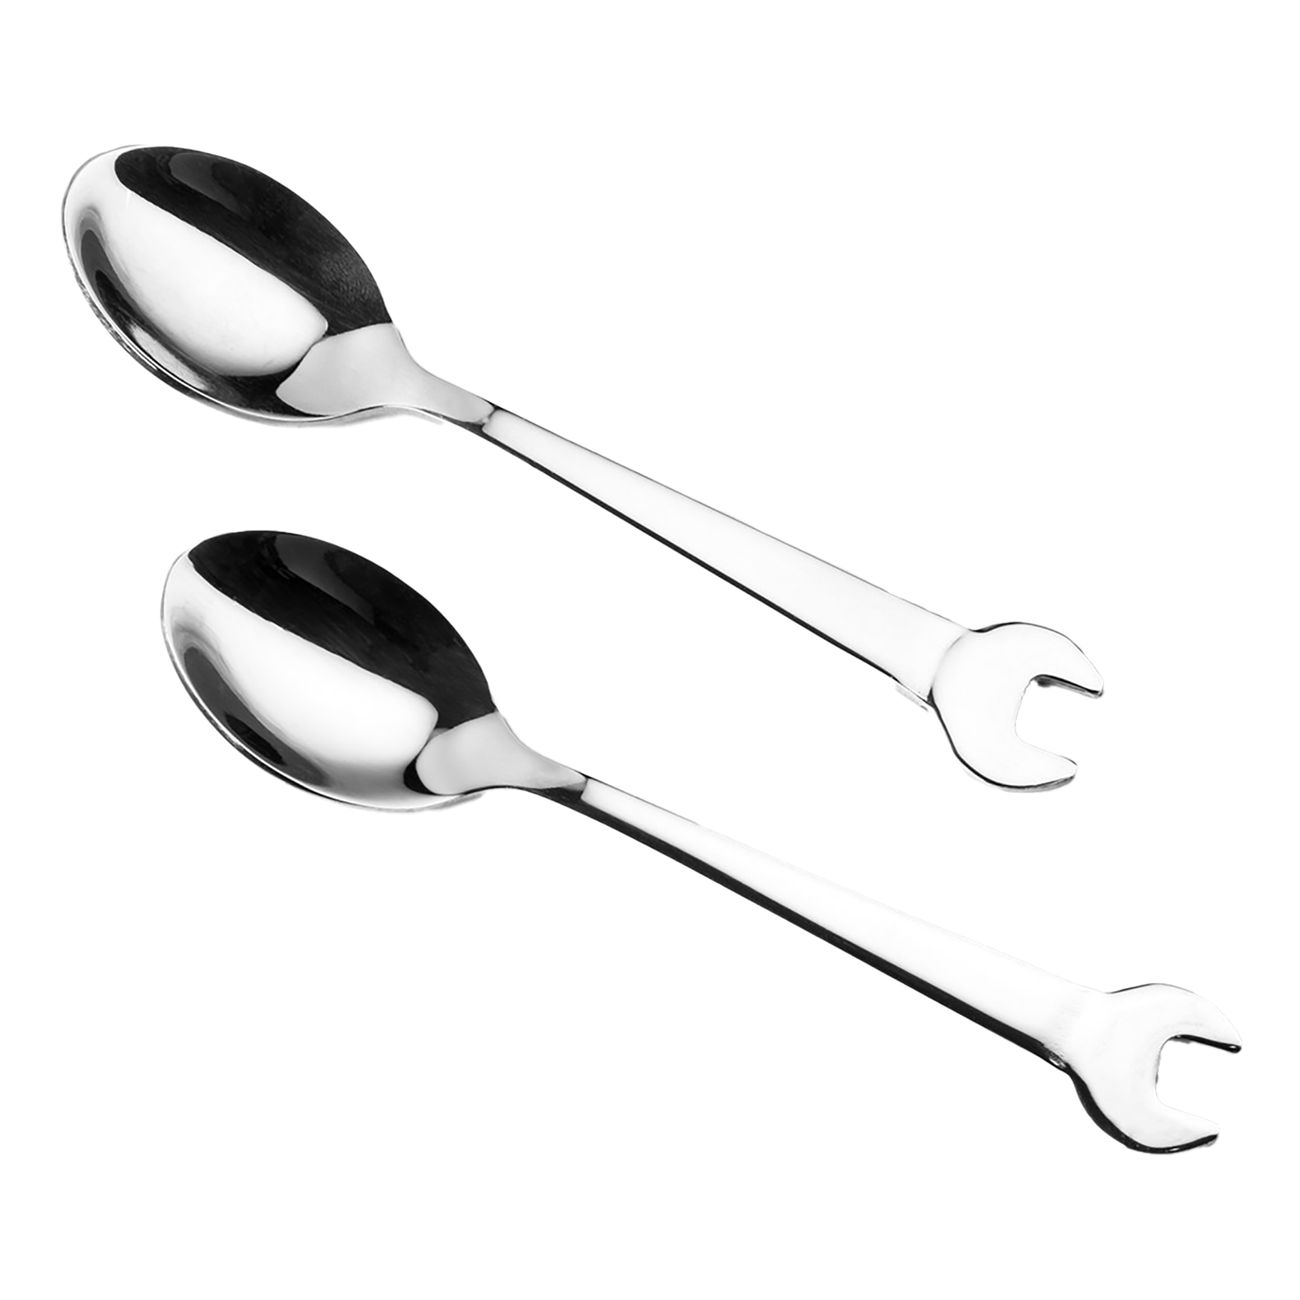 wrench-teaspoons-2-pcs-86108-2